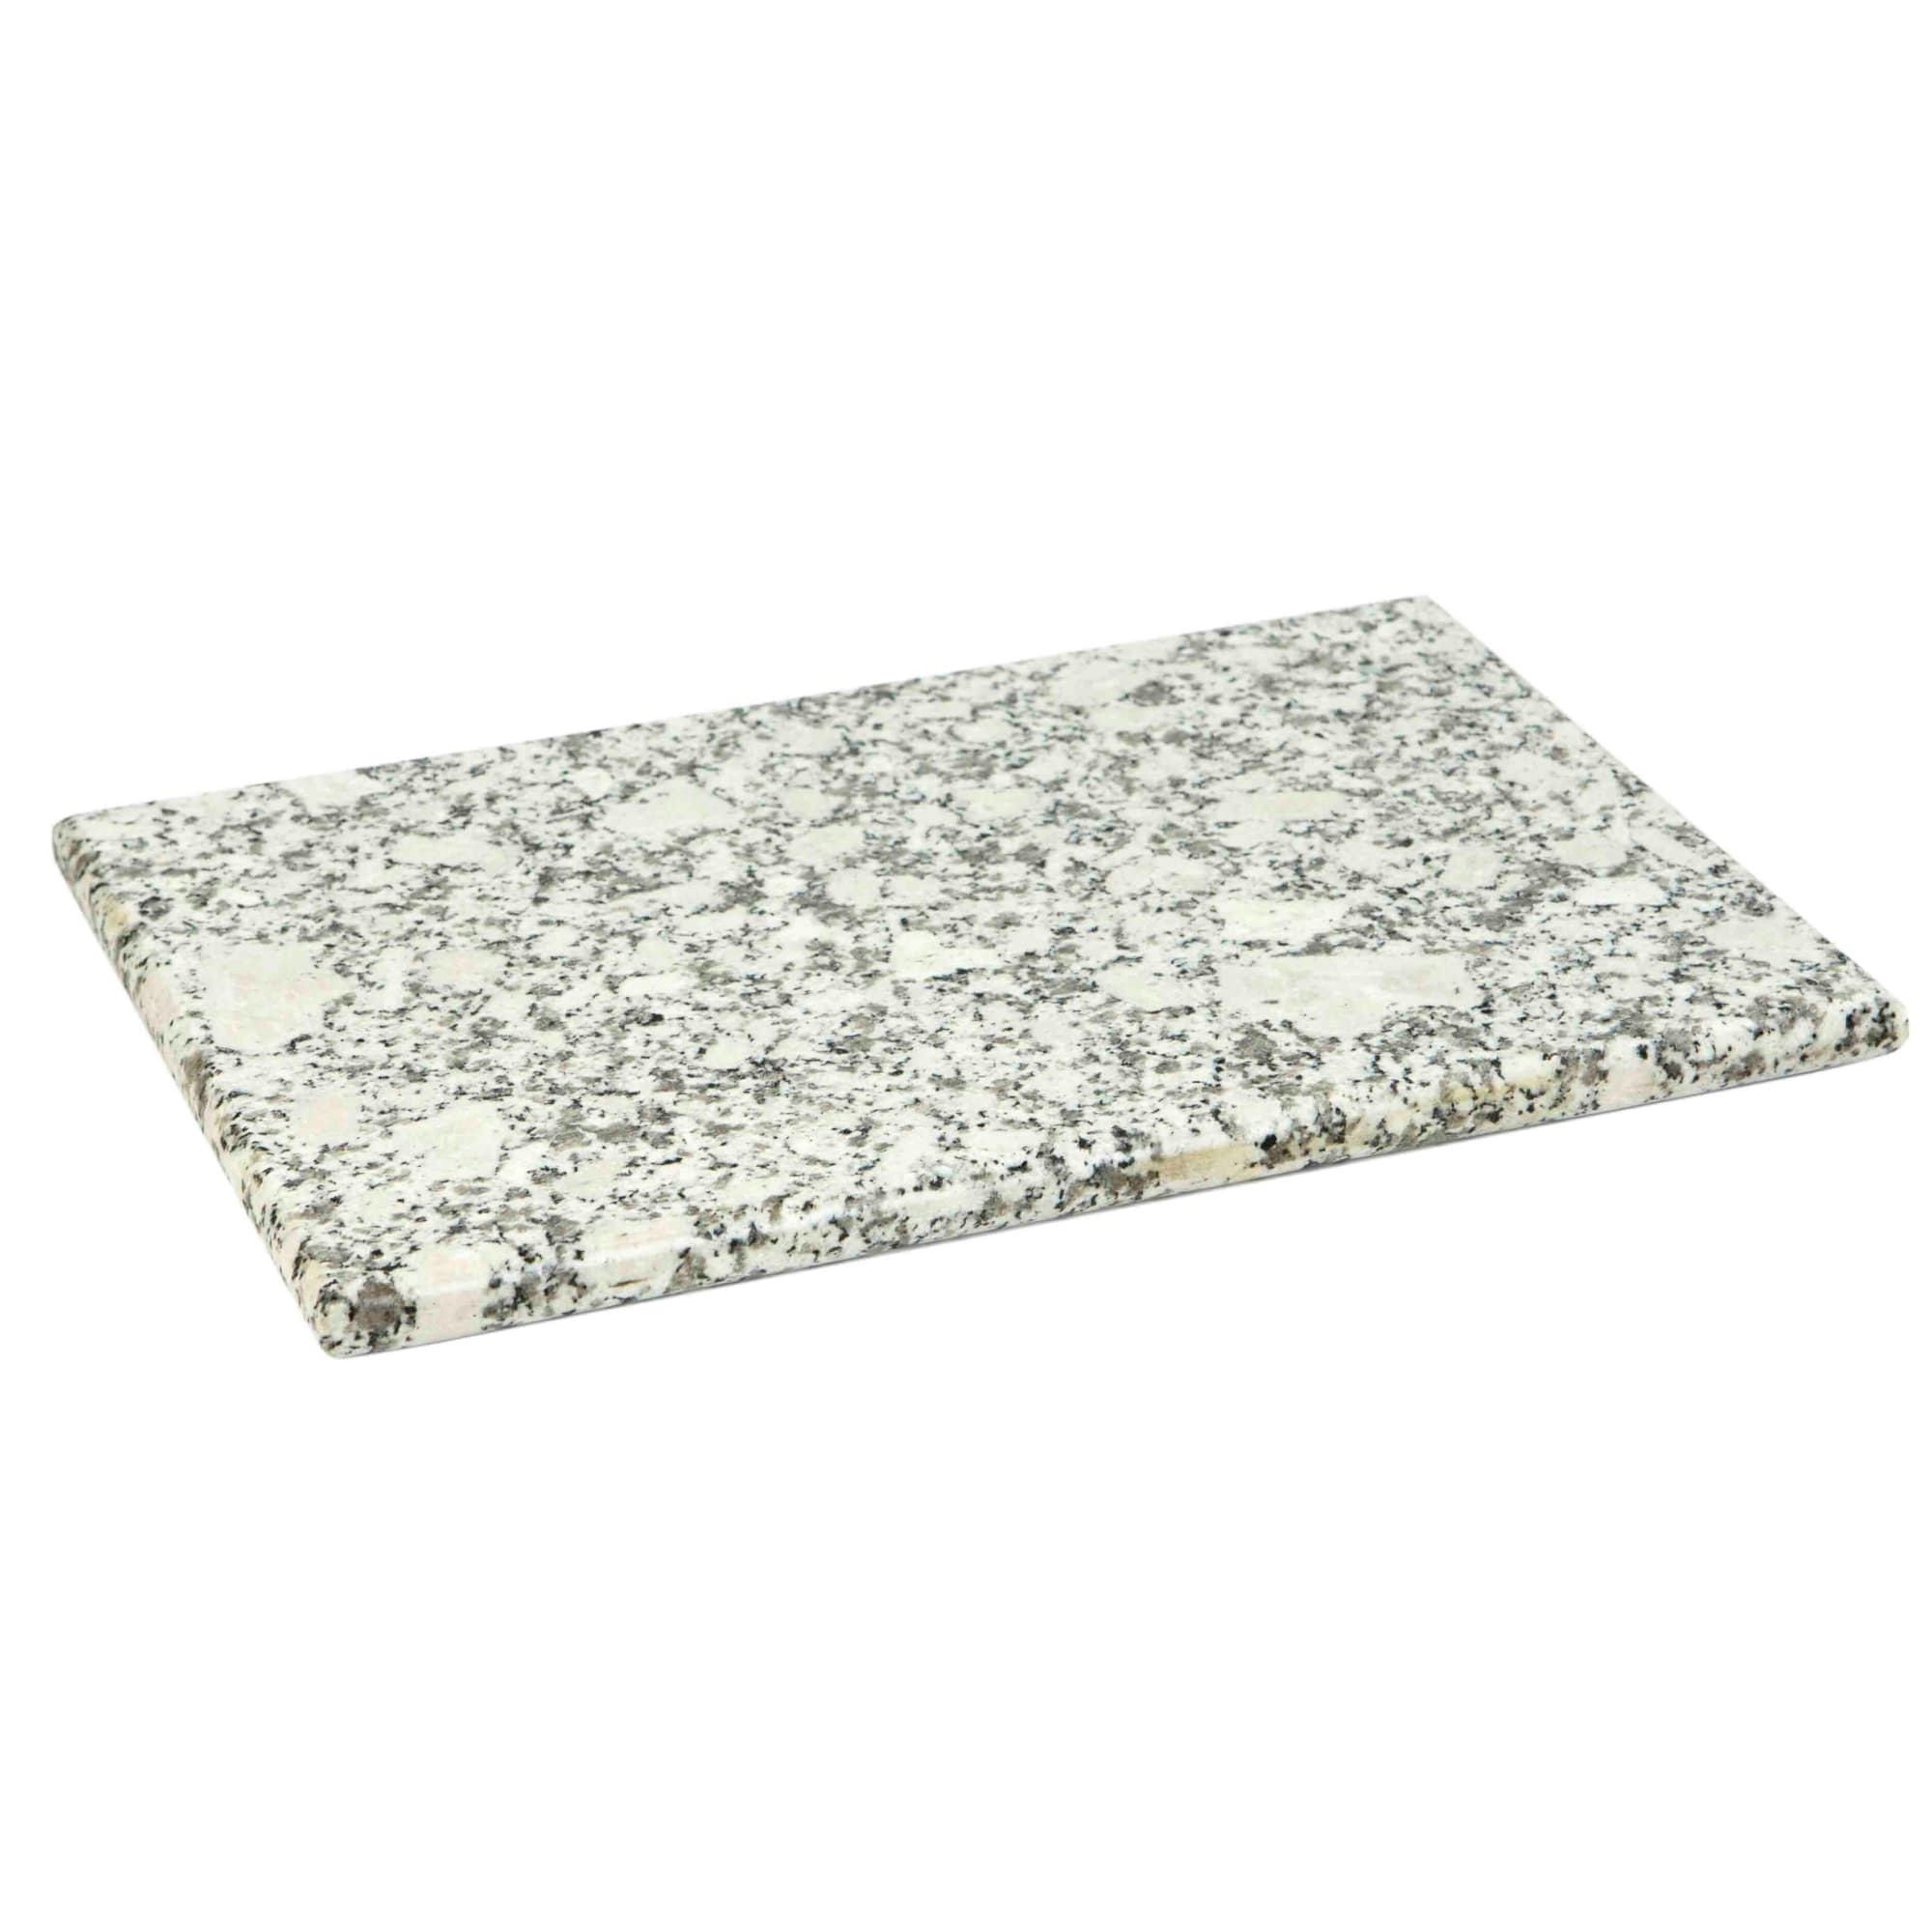 Home Basics 8 x 12 Granite Cutting Board, White $8 EACH, CASE PACK OF 8